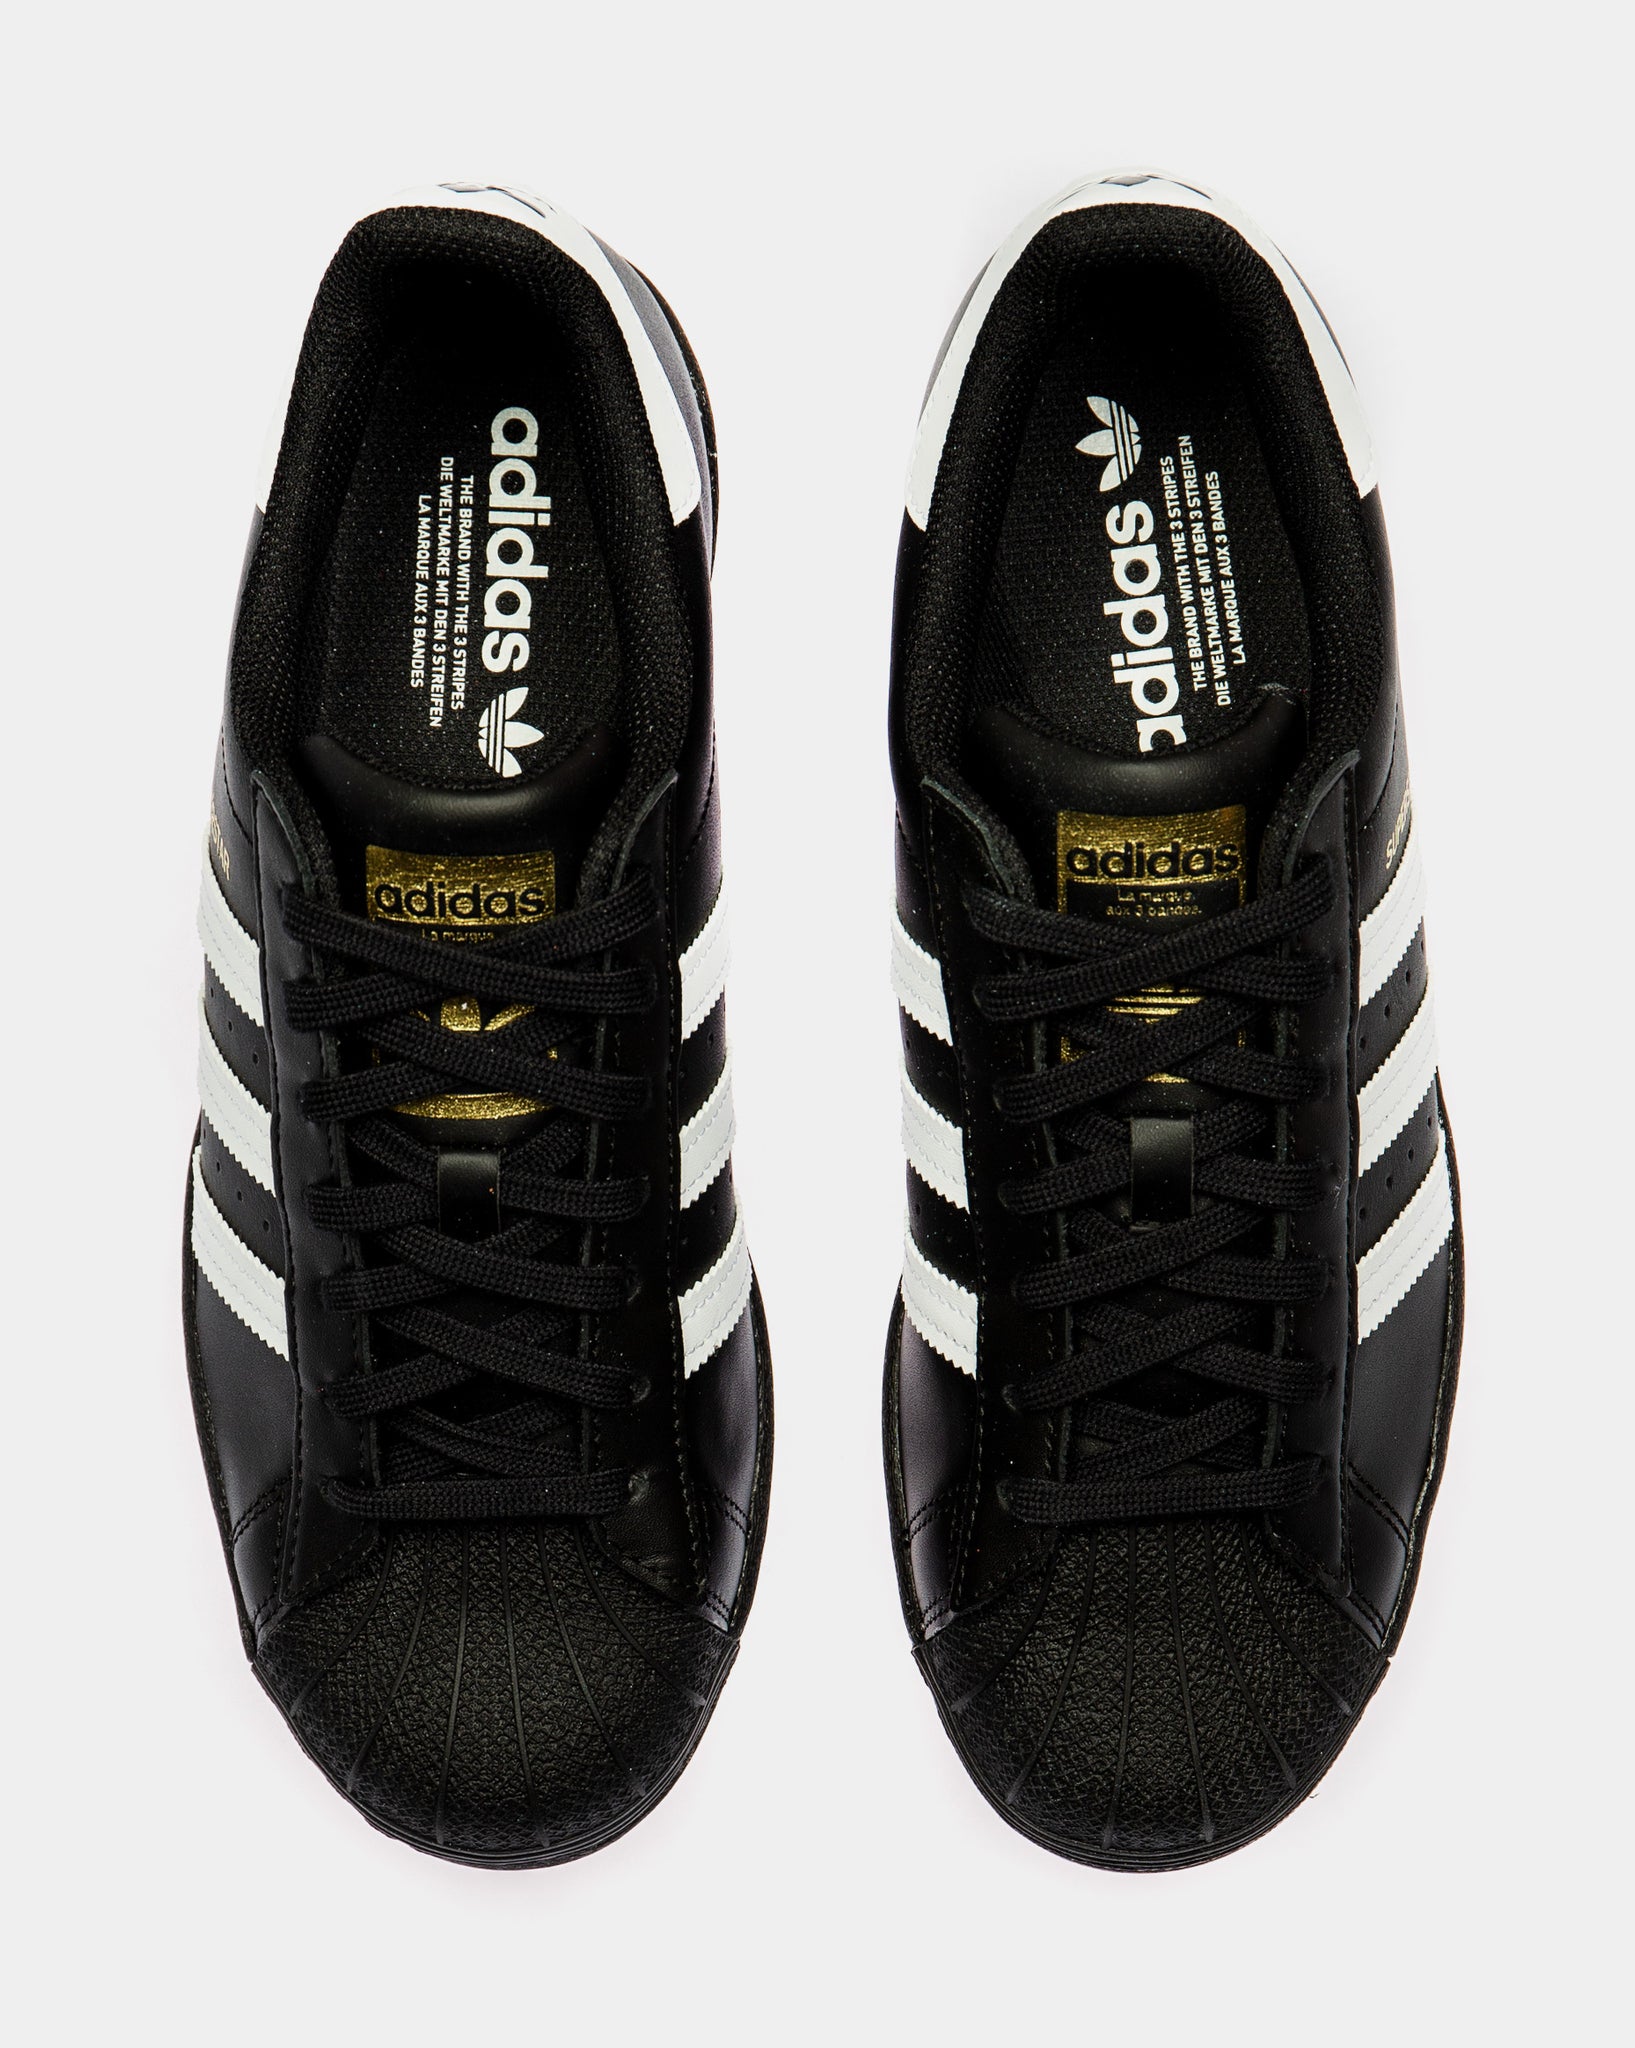 Adidas Superstar Shoes - White/Black - 12